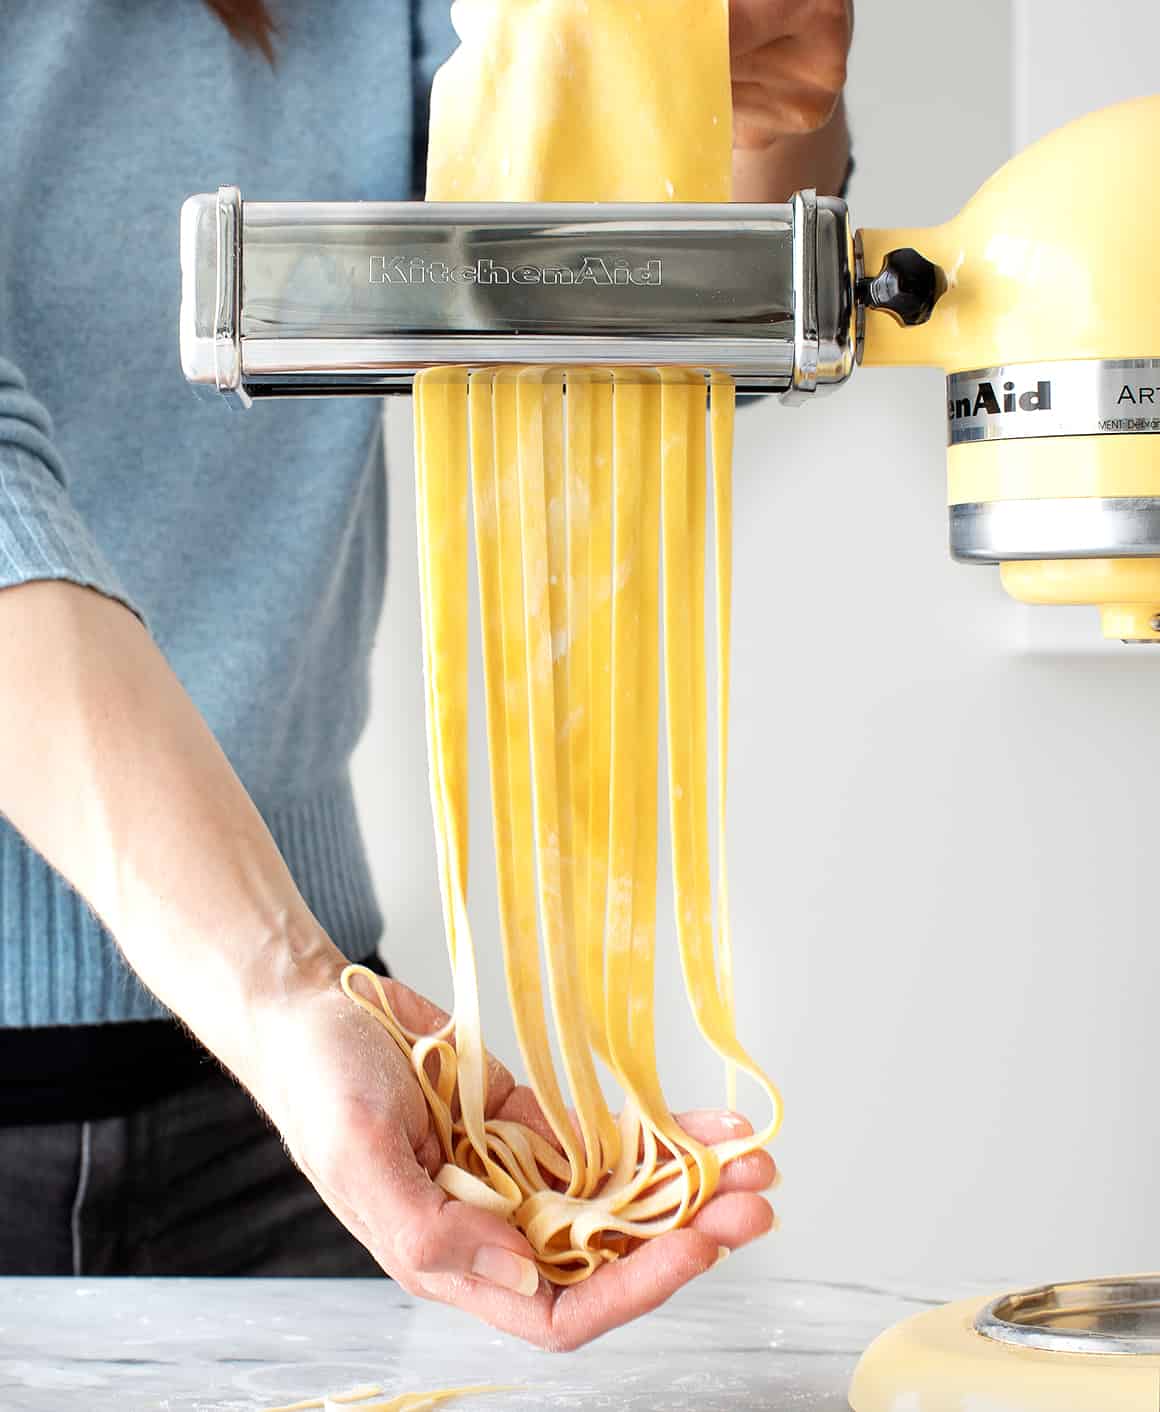 Homemade pasta recipe